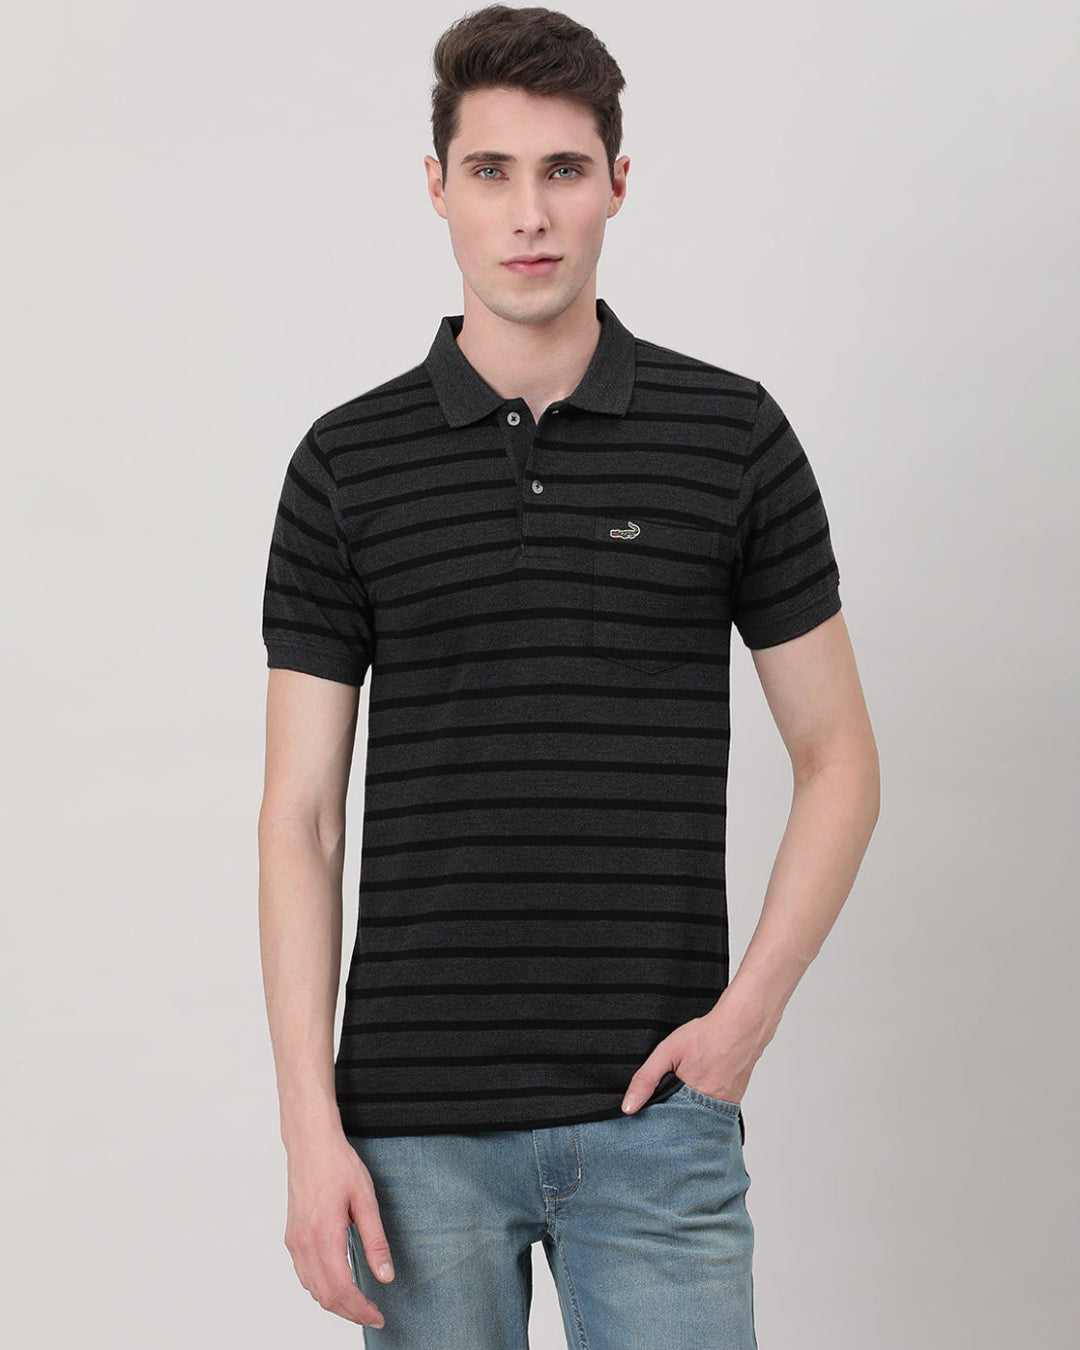 Casual Black T-Shirt Striper Half Sleeve Slim Fit with Collar